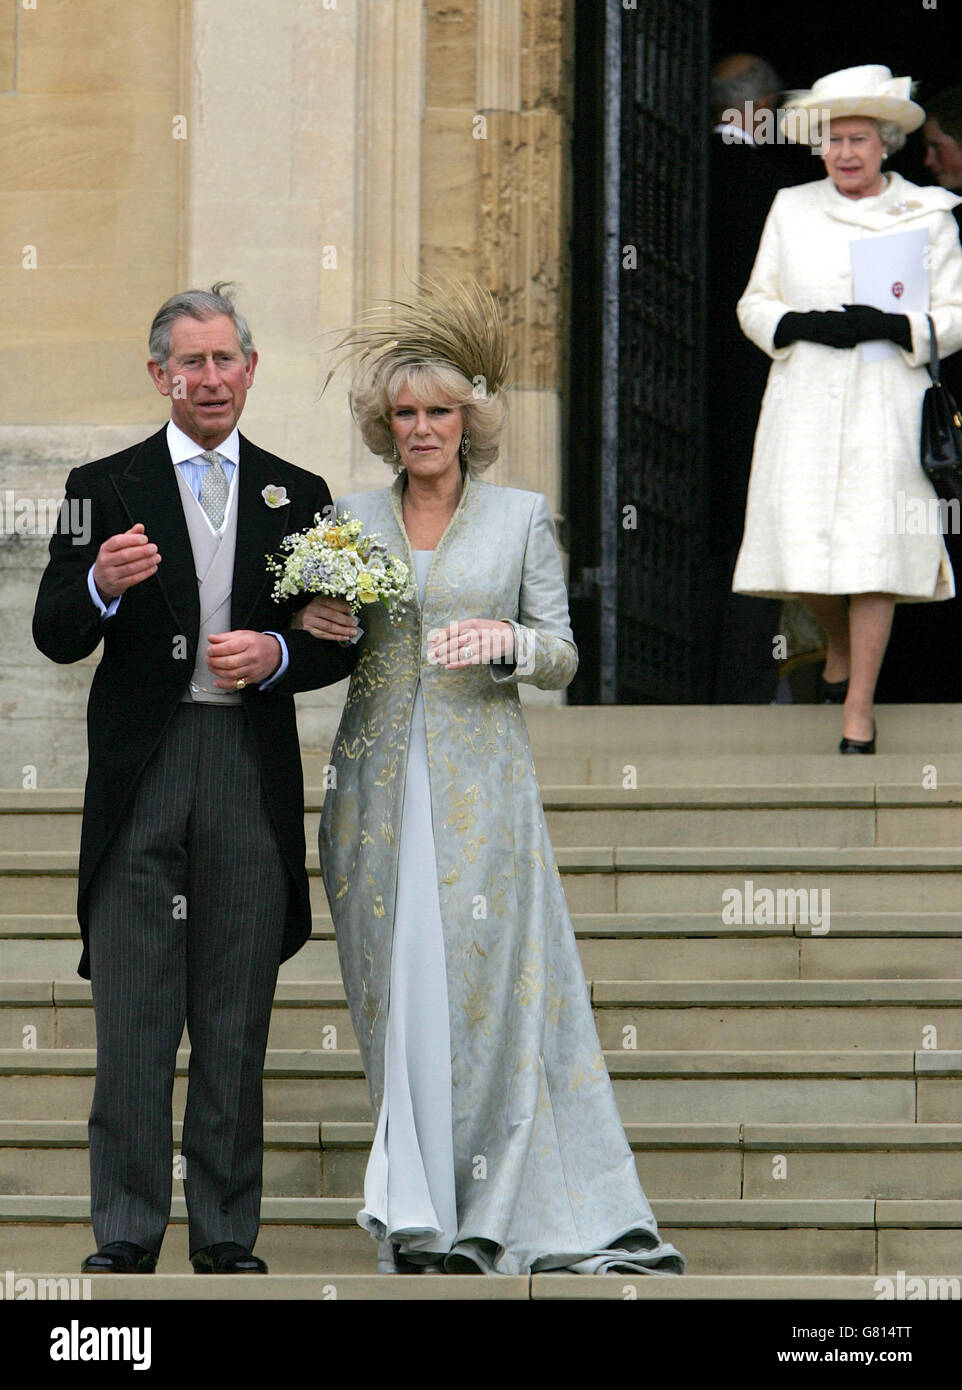 Wales and his bride Camilla, Duchess ...